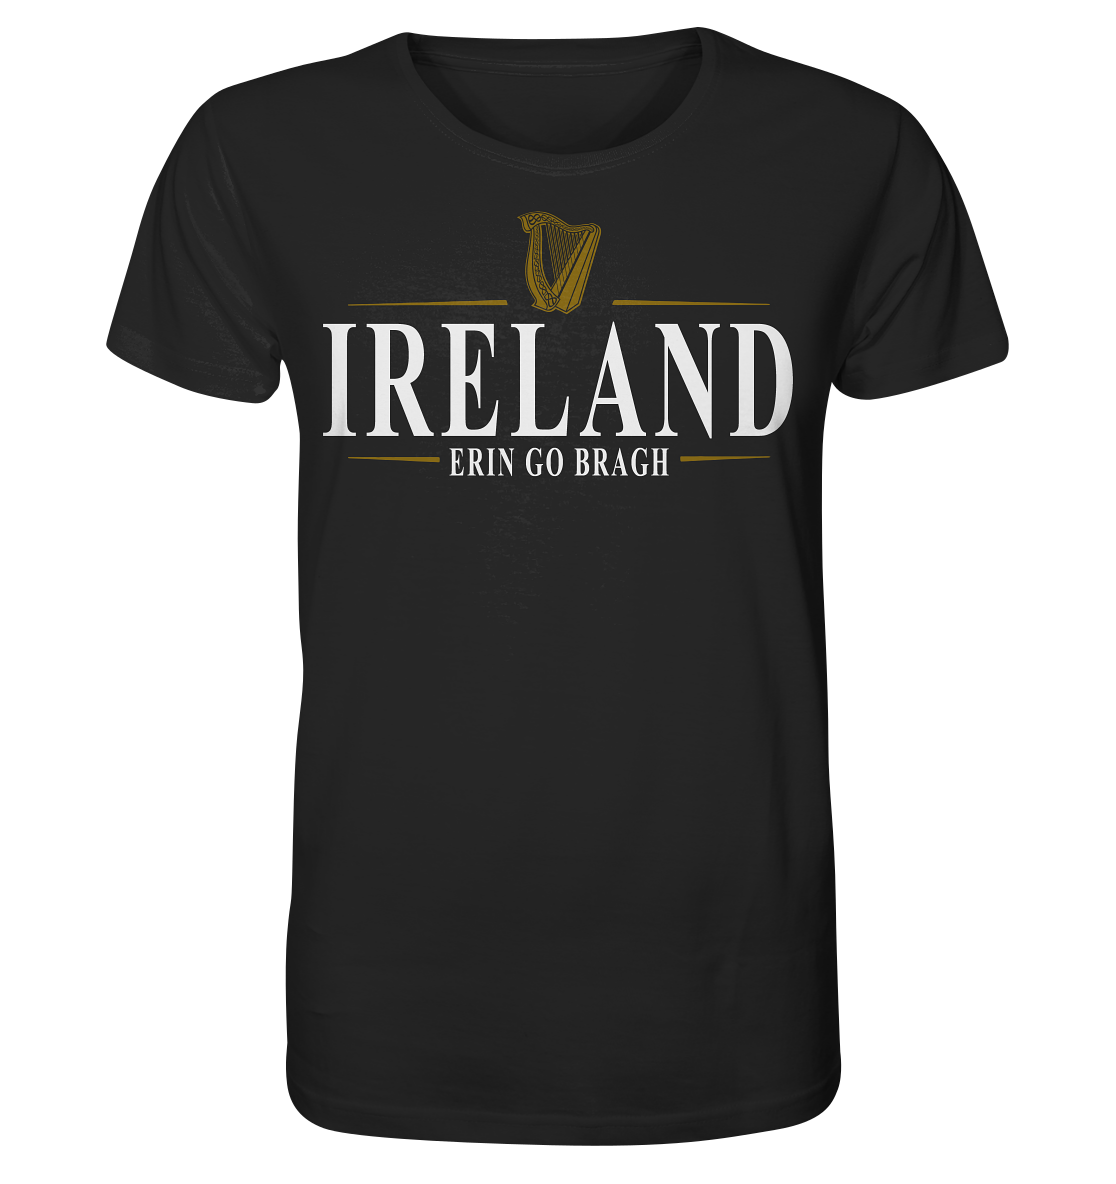 Ireland "Erin Go Bragh" - Organic Shirt